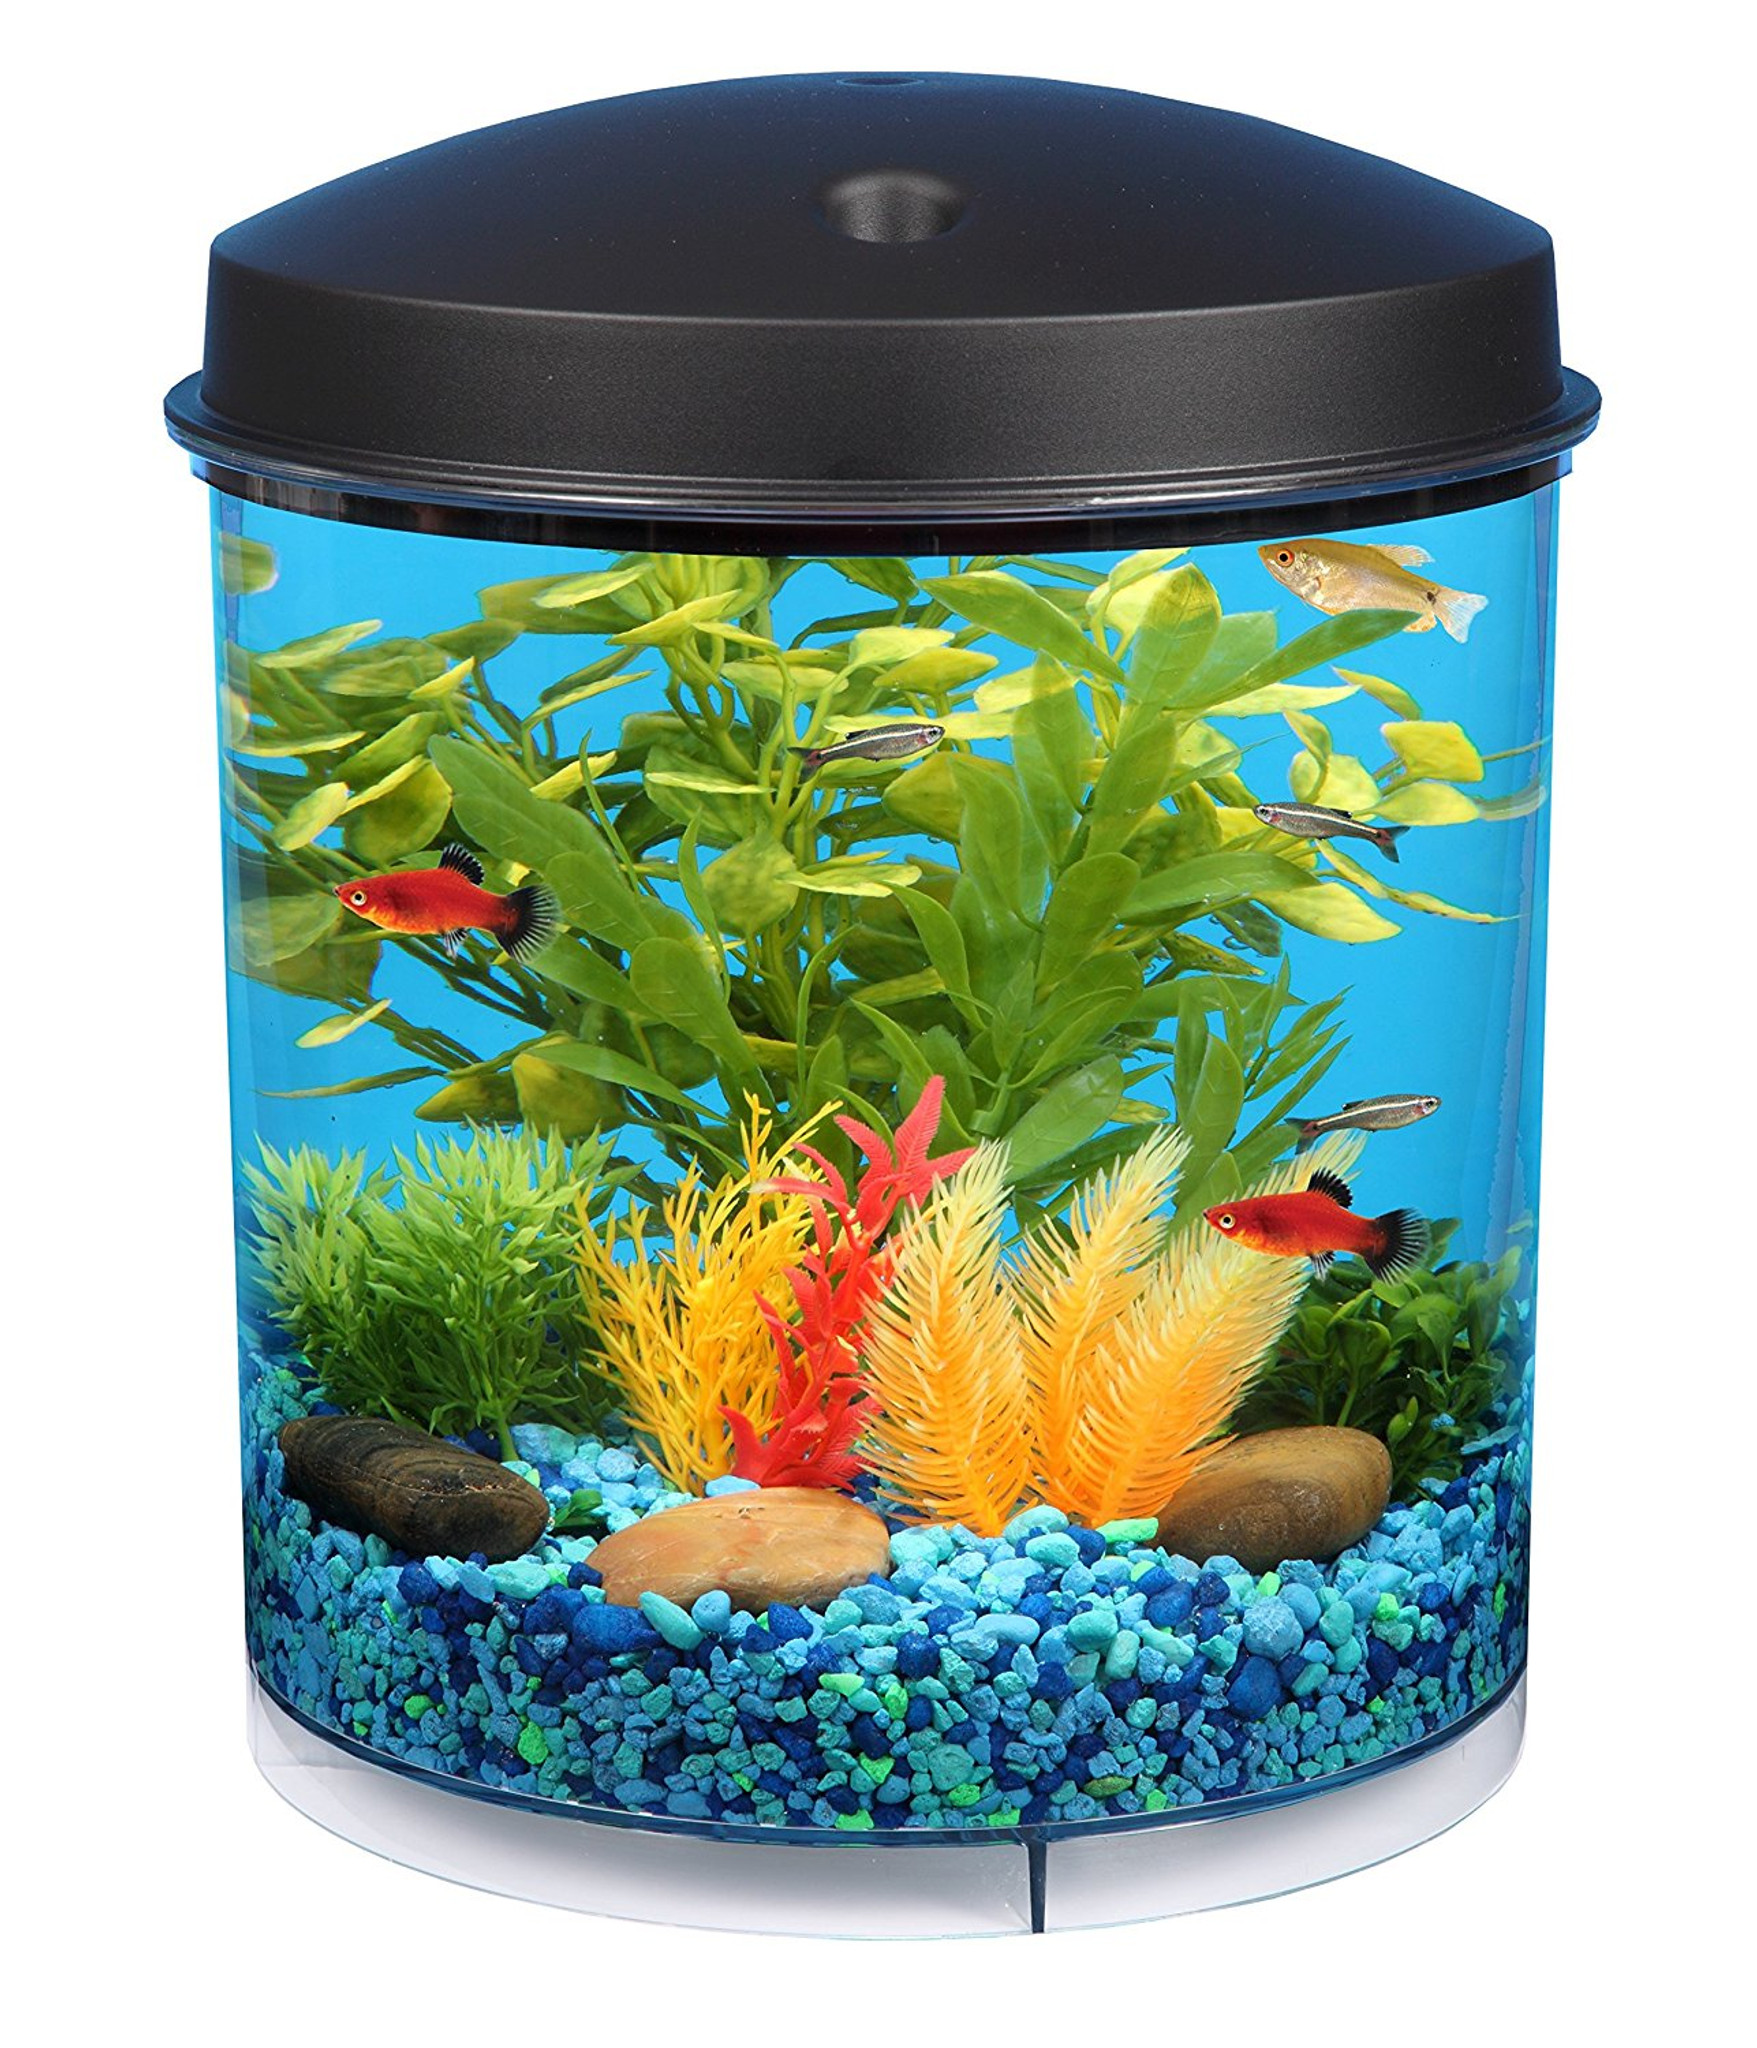 Mag-Float Floating Glass Aquarium Cleaner - Small